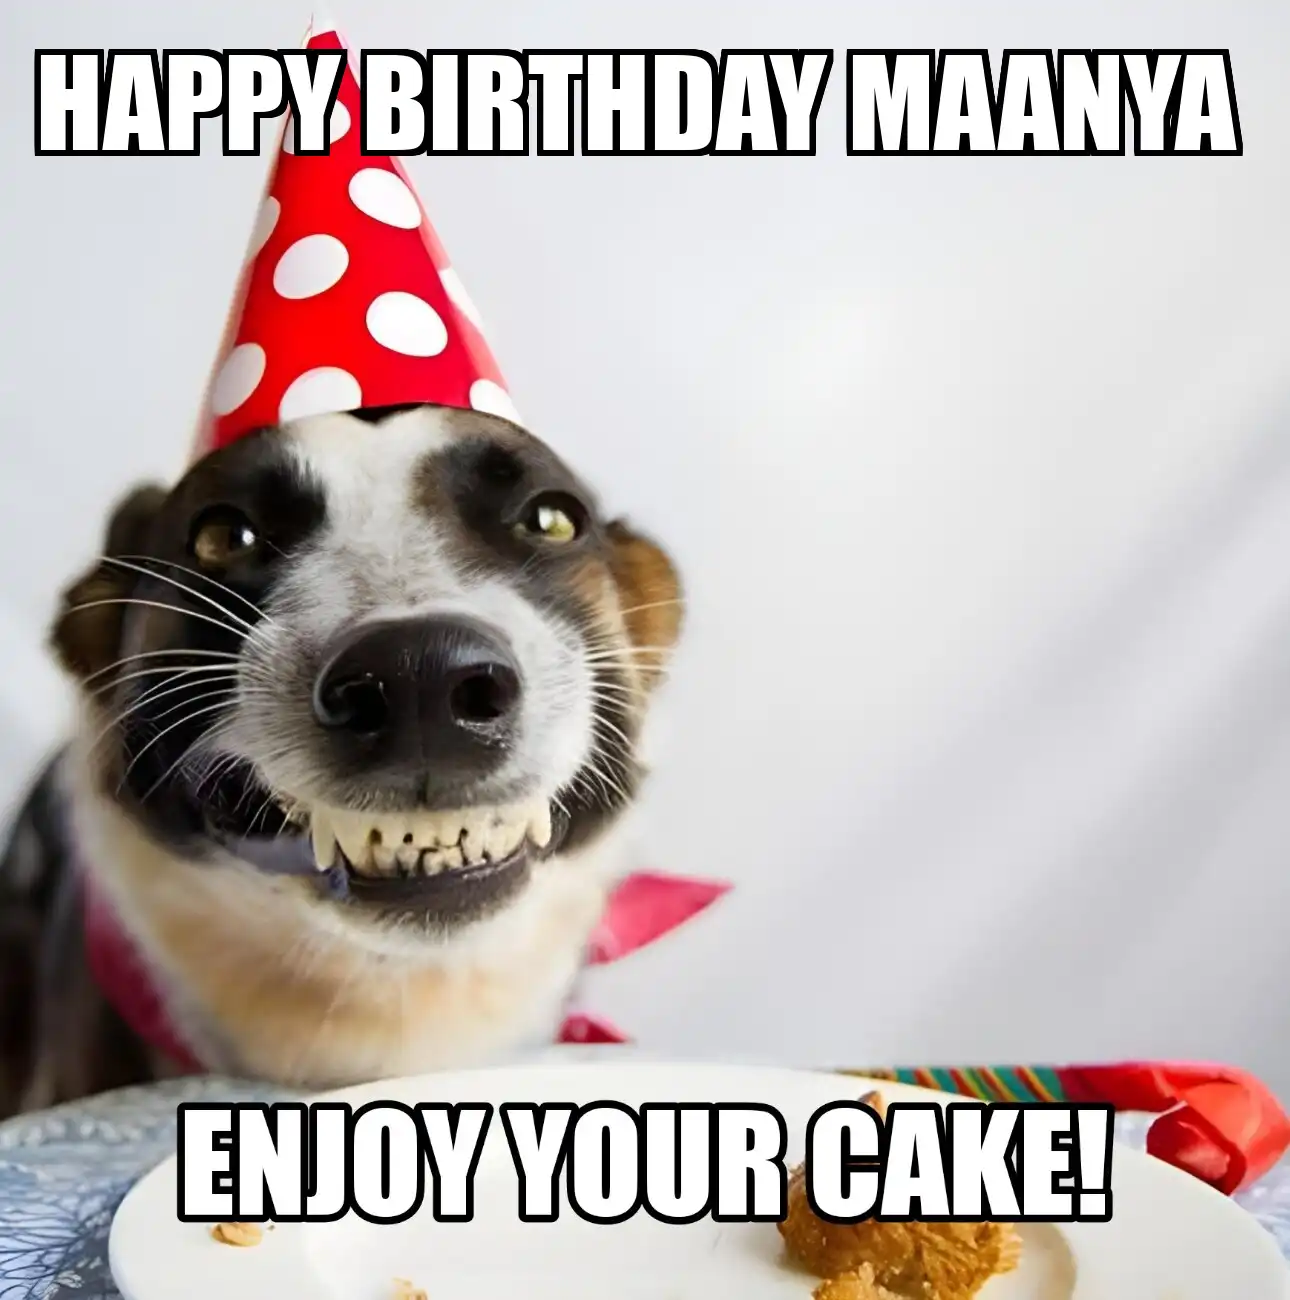 Happy Birthday Maanya Enjoy Your Cake Dog Meme